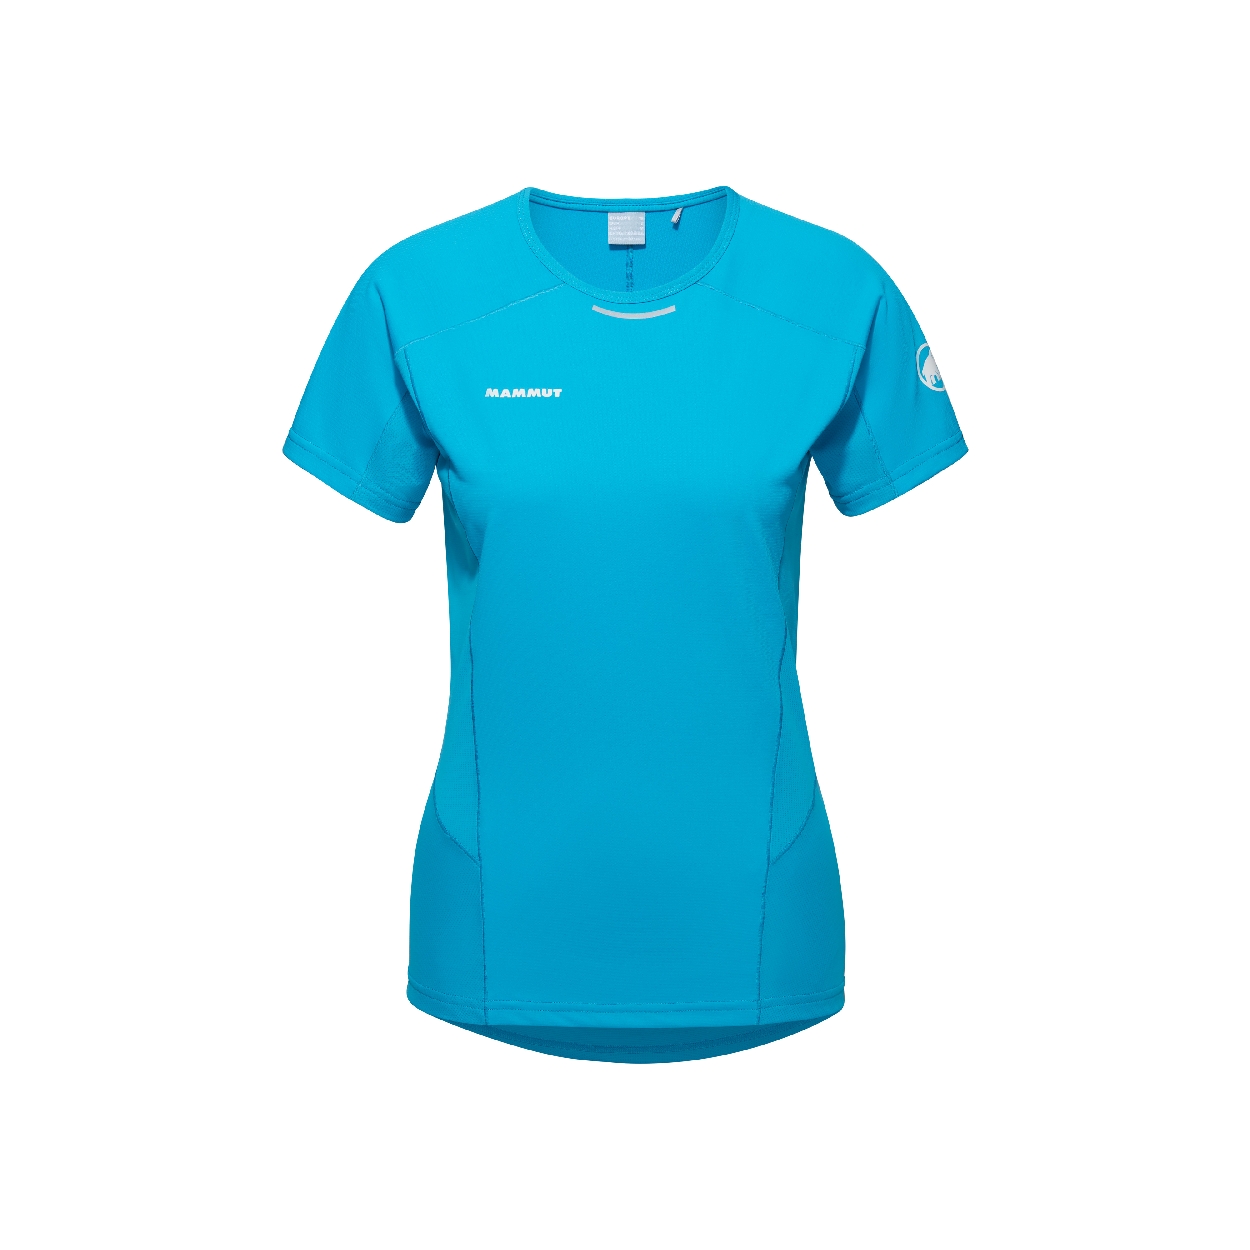 Aenergy FL T-Shirt Wmn, glacier blue